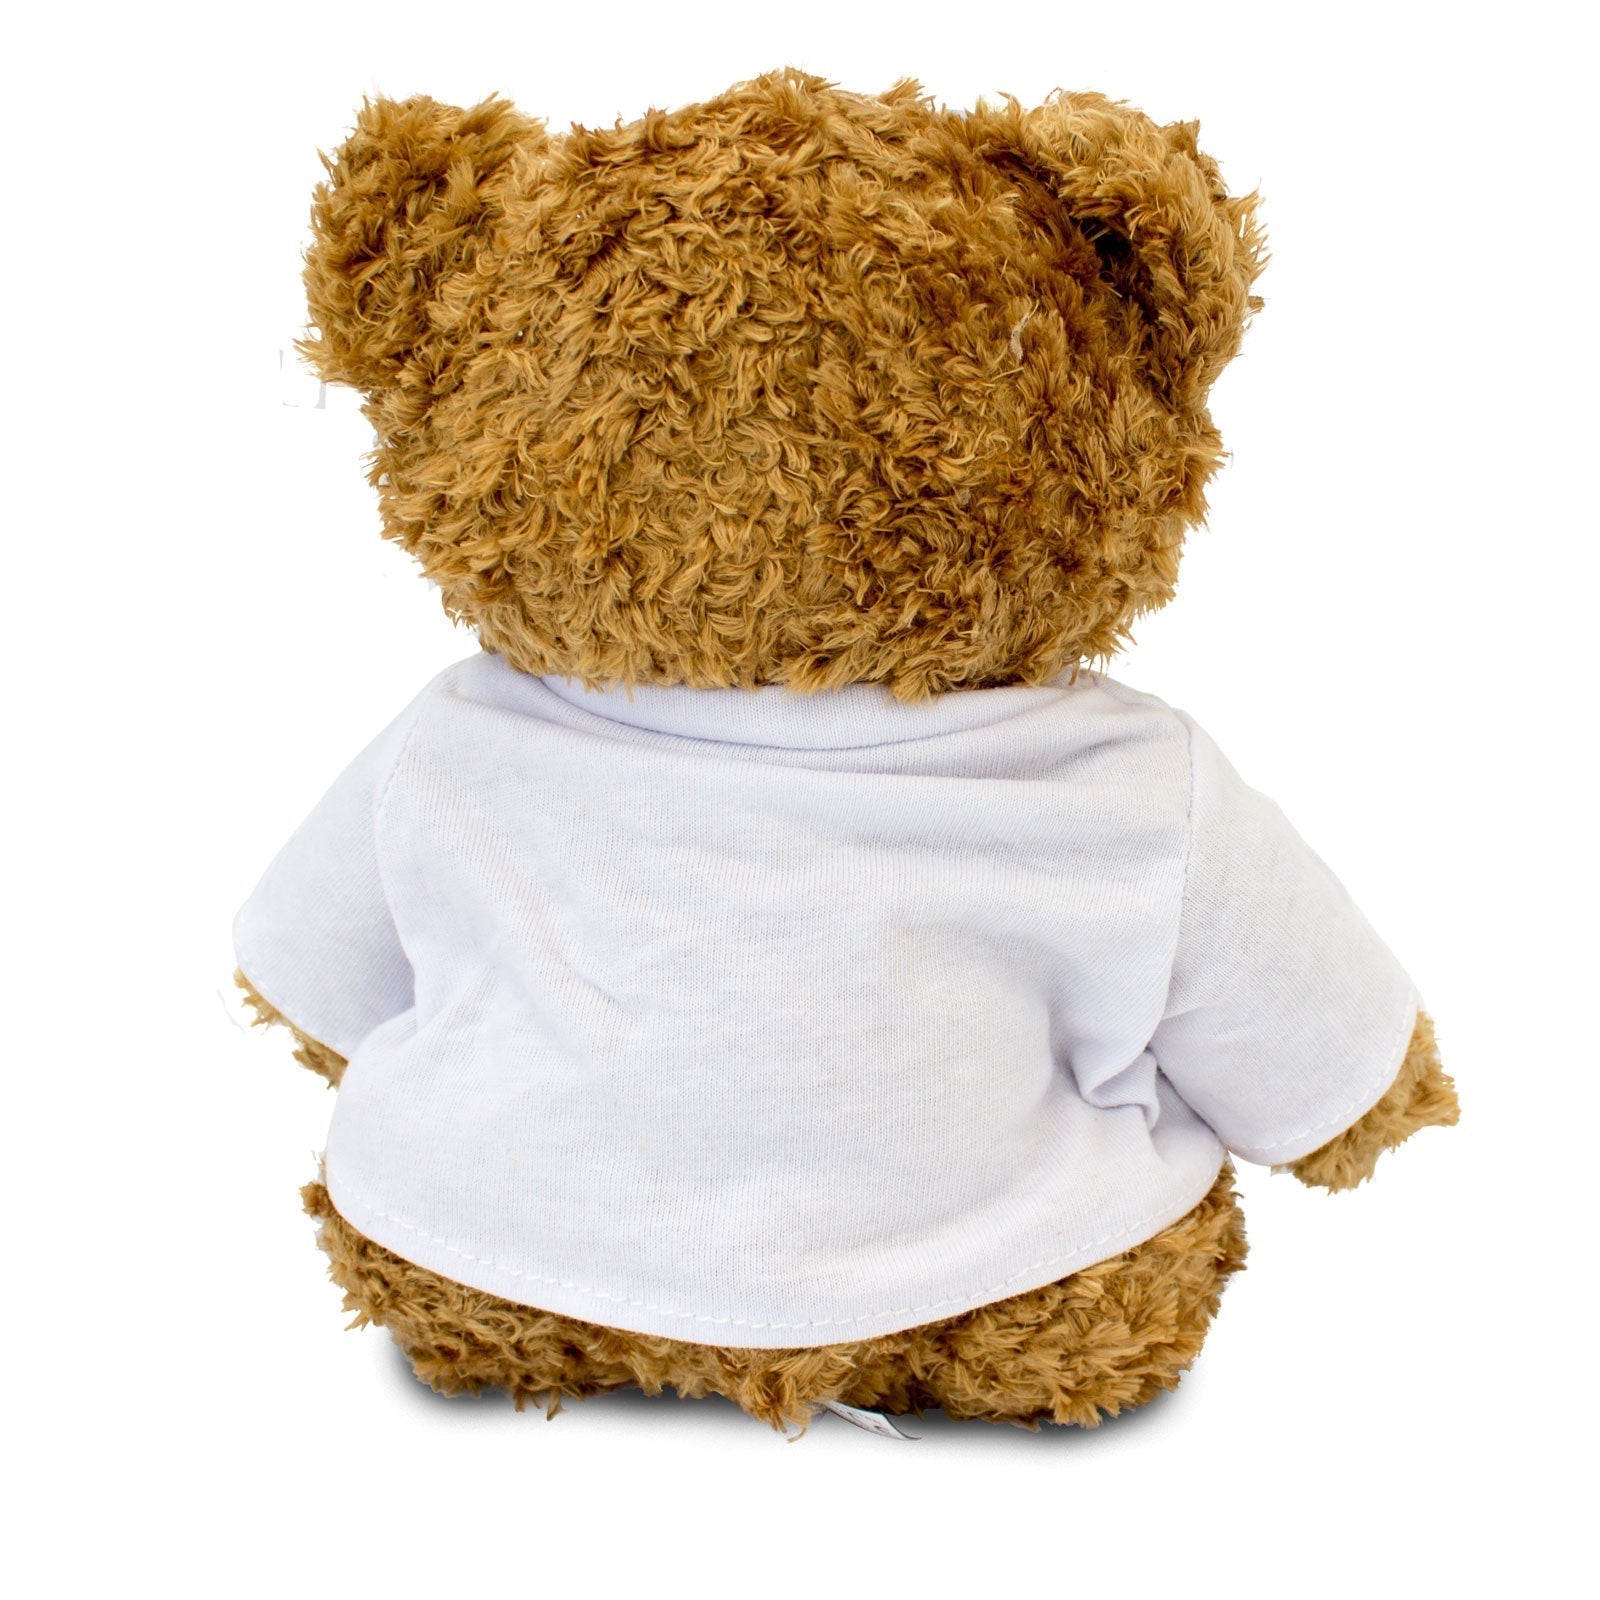 I Love Dessert - Teddy Bear